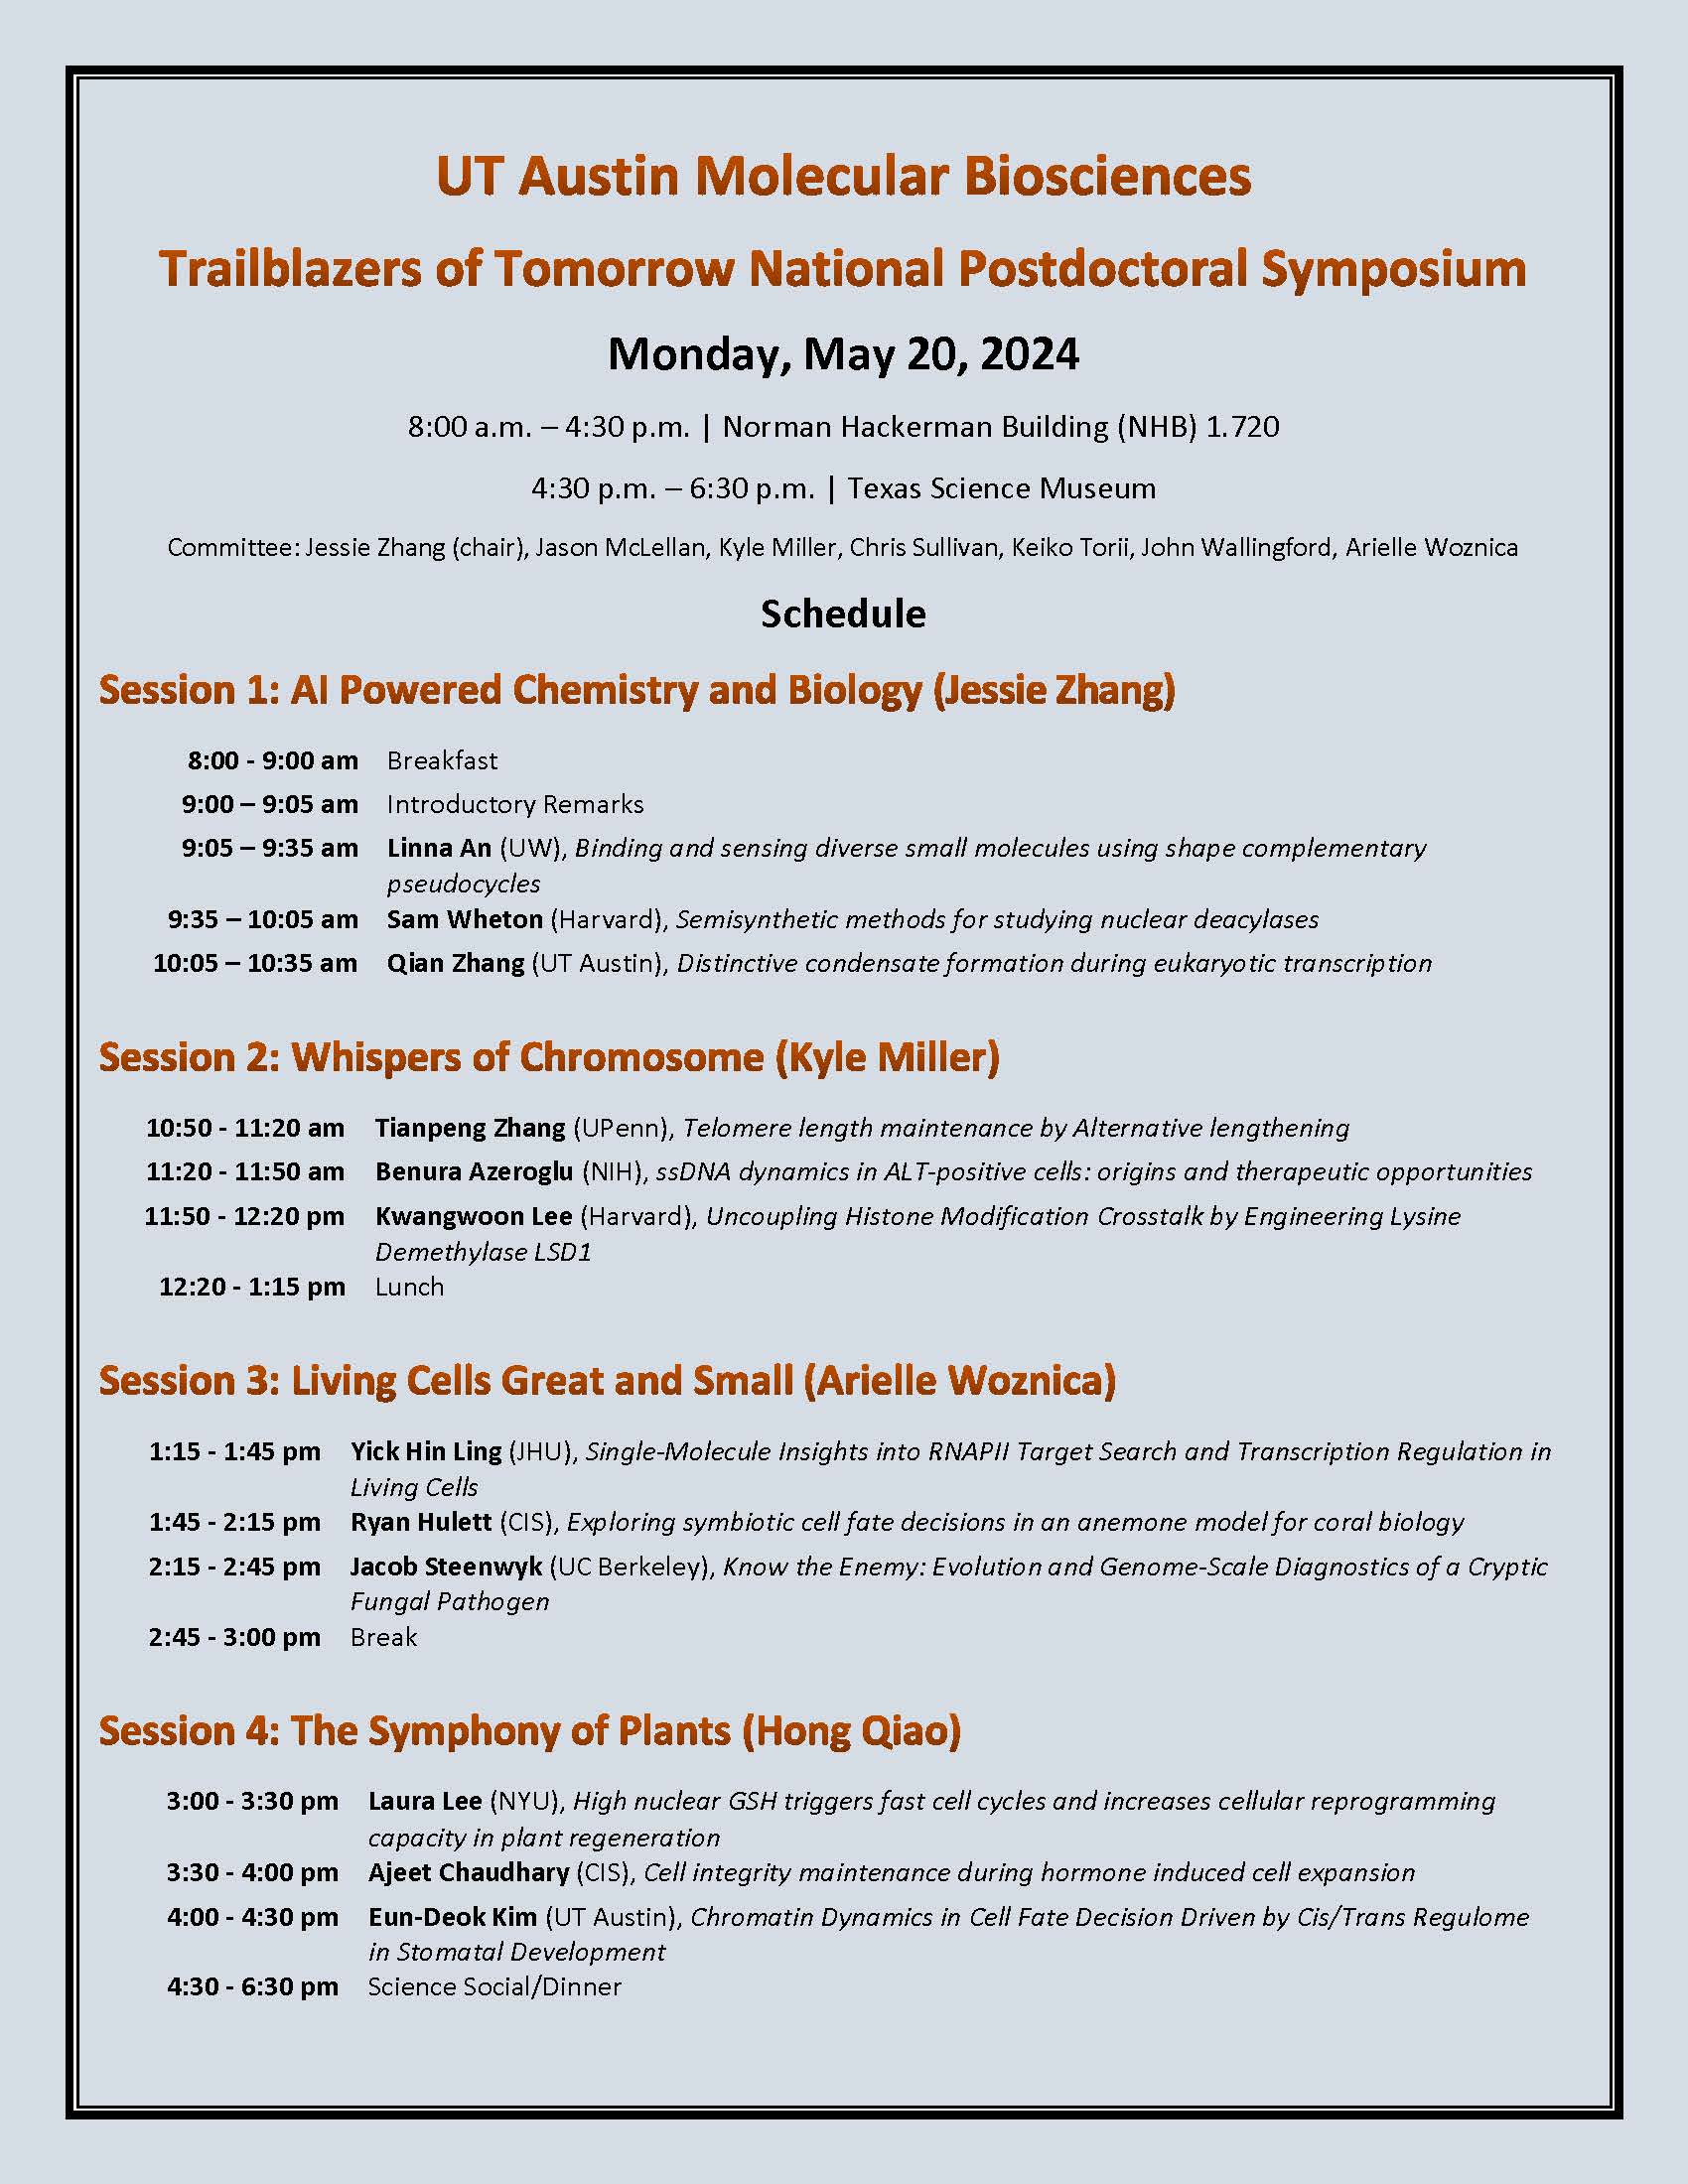 MBS Symposium Schedule